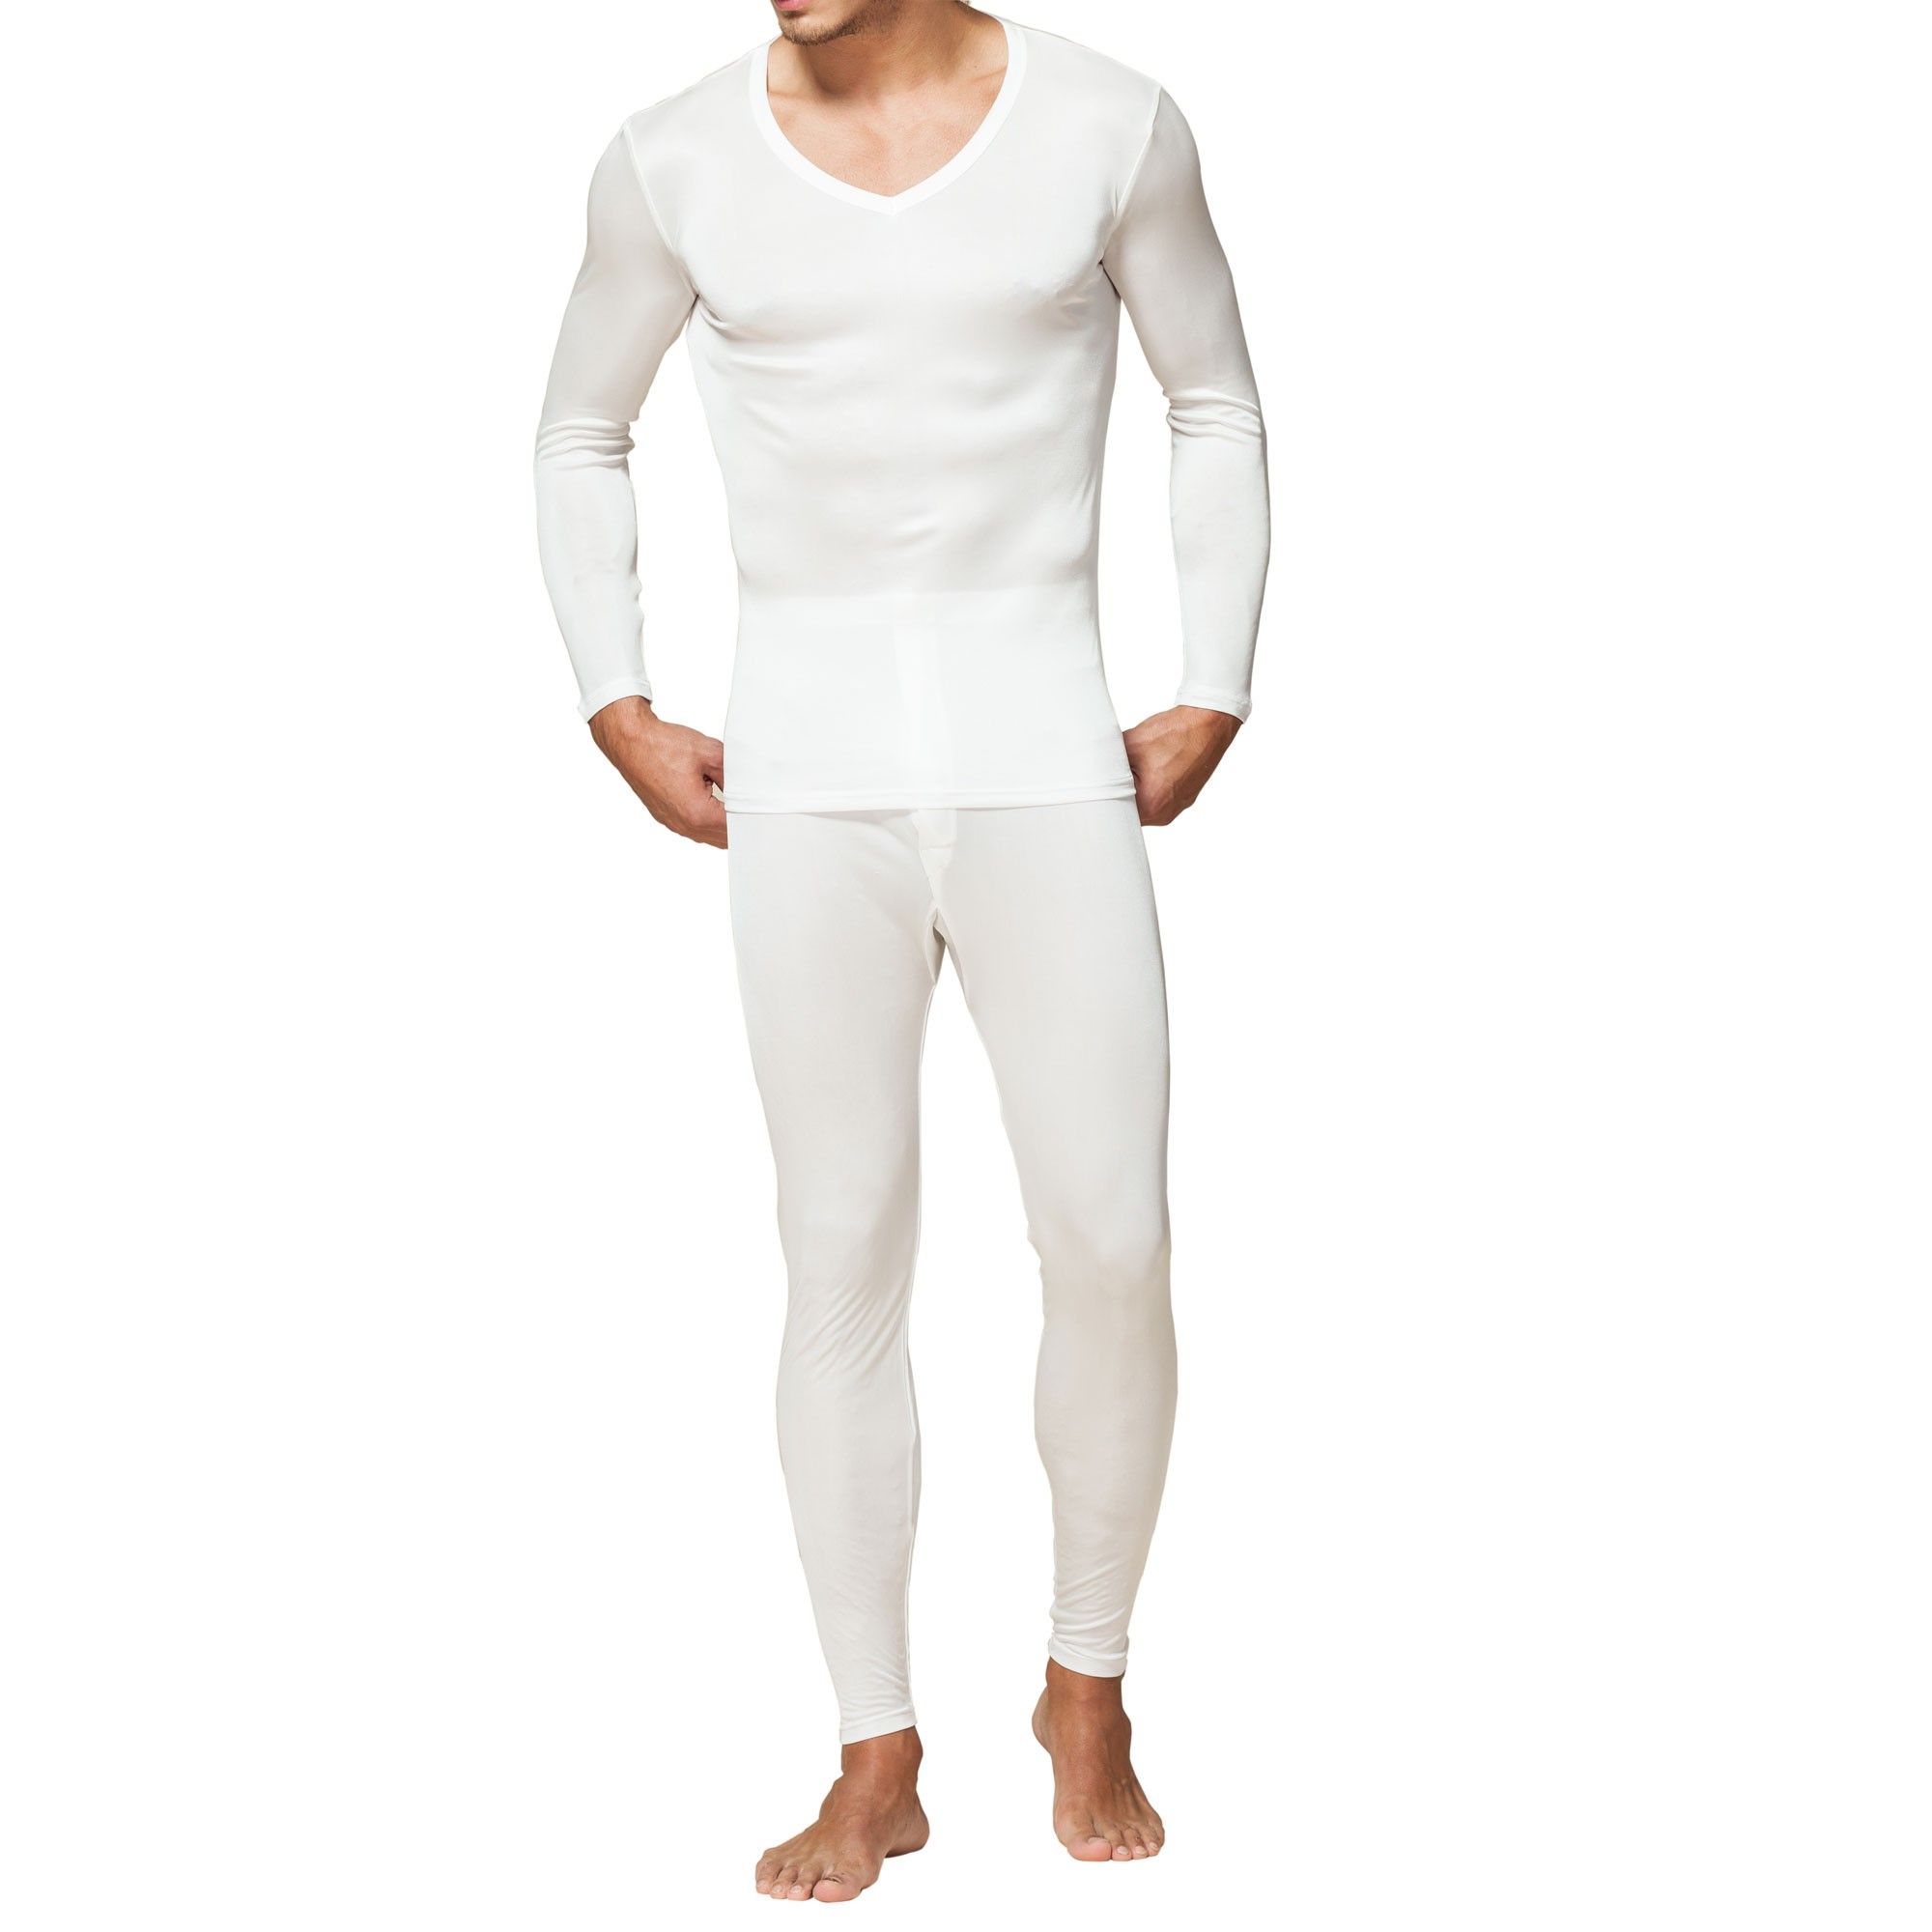 100% Pure Knit Silk Men's Long Warm Thermal Underwear Pajama Set L 2XL 4 Color